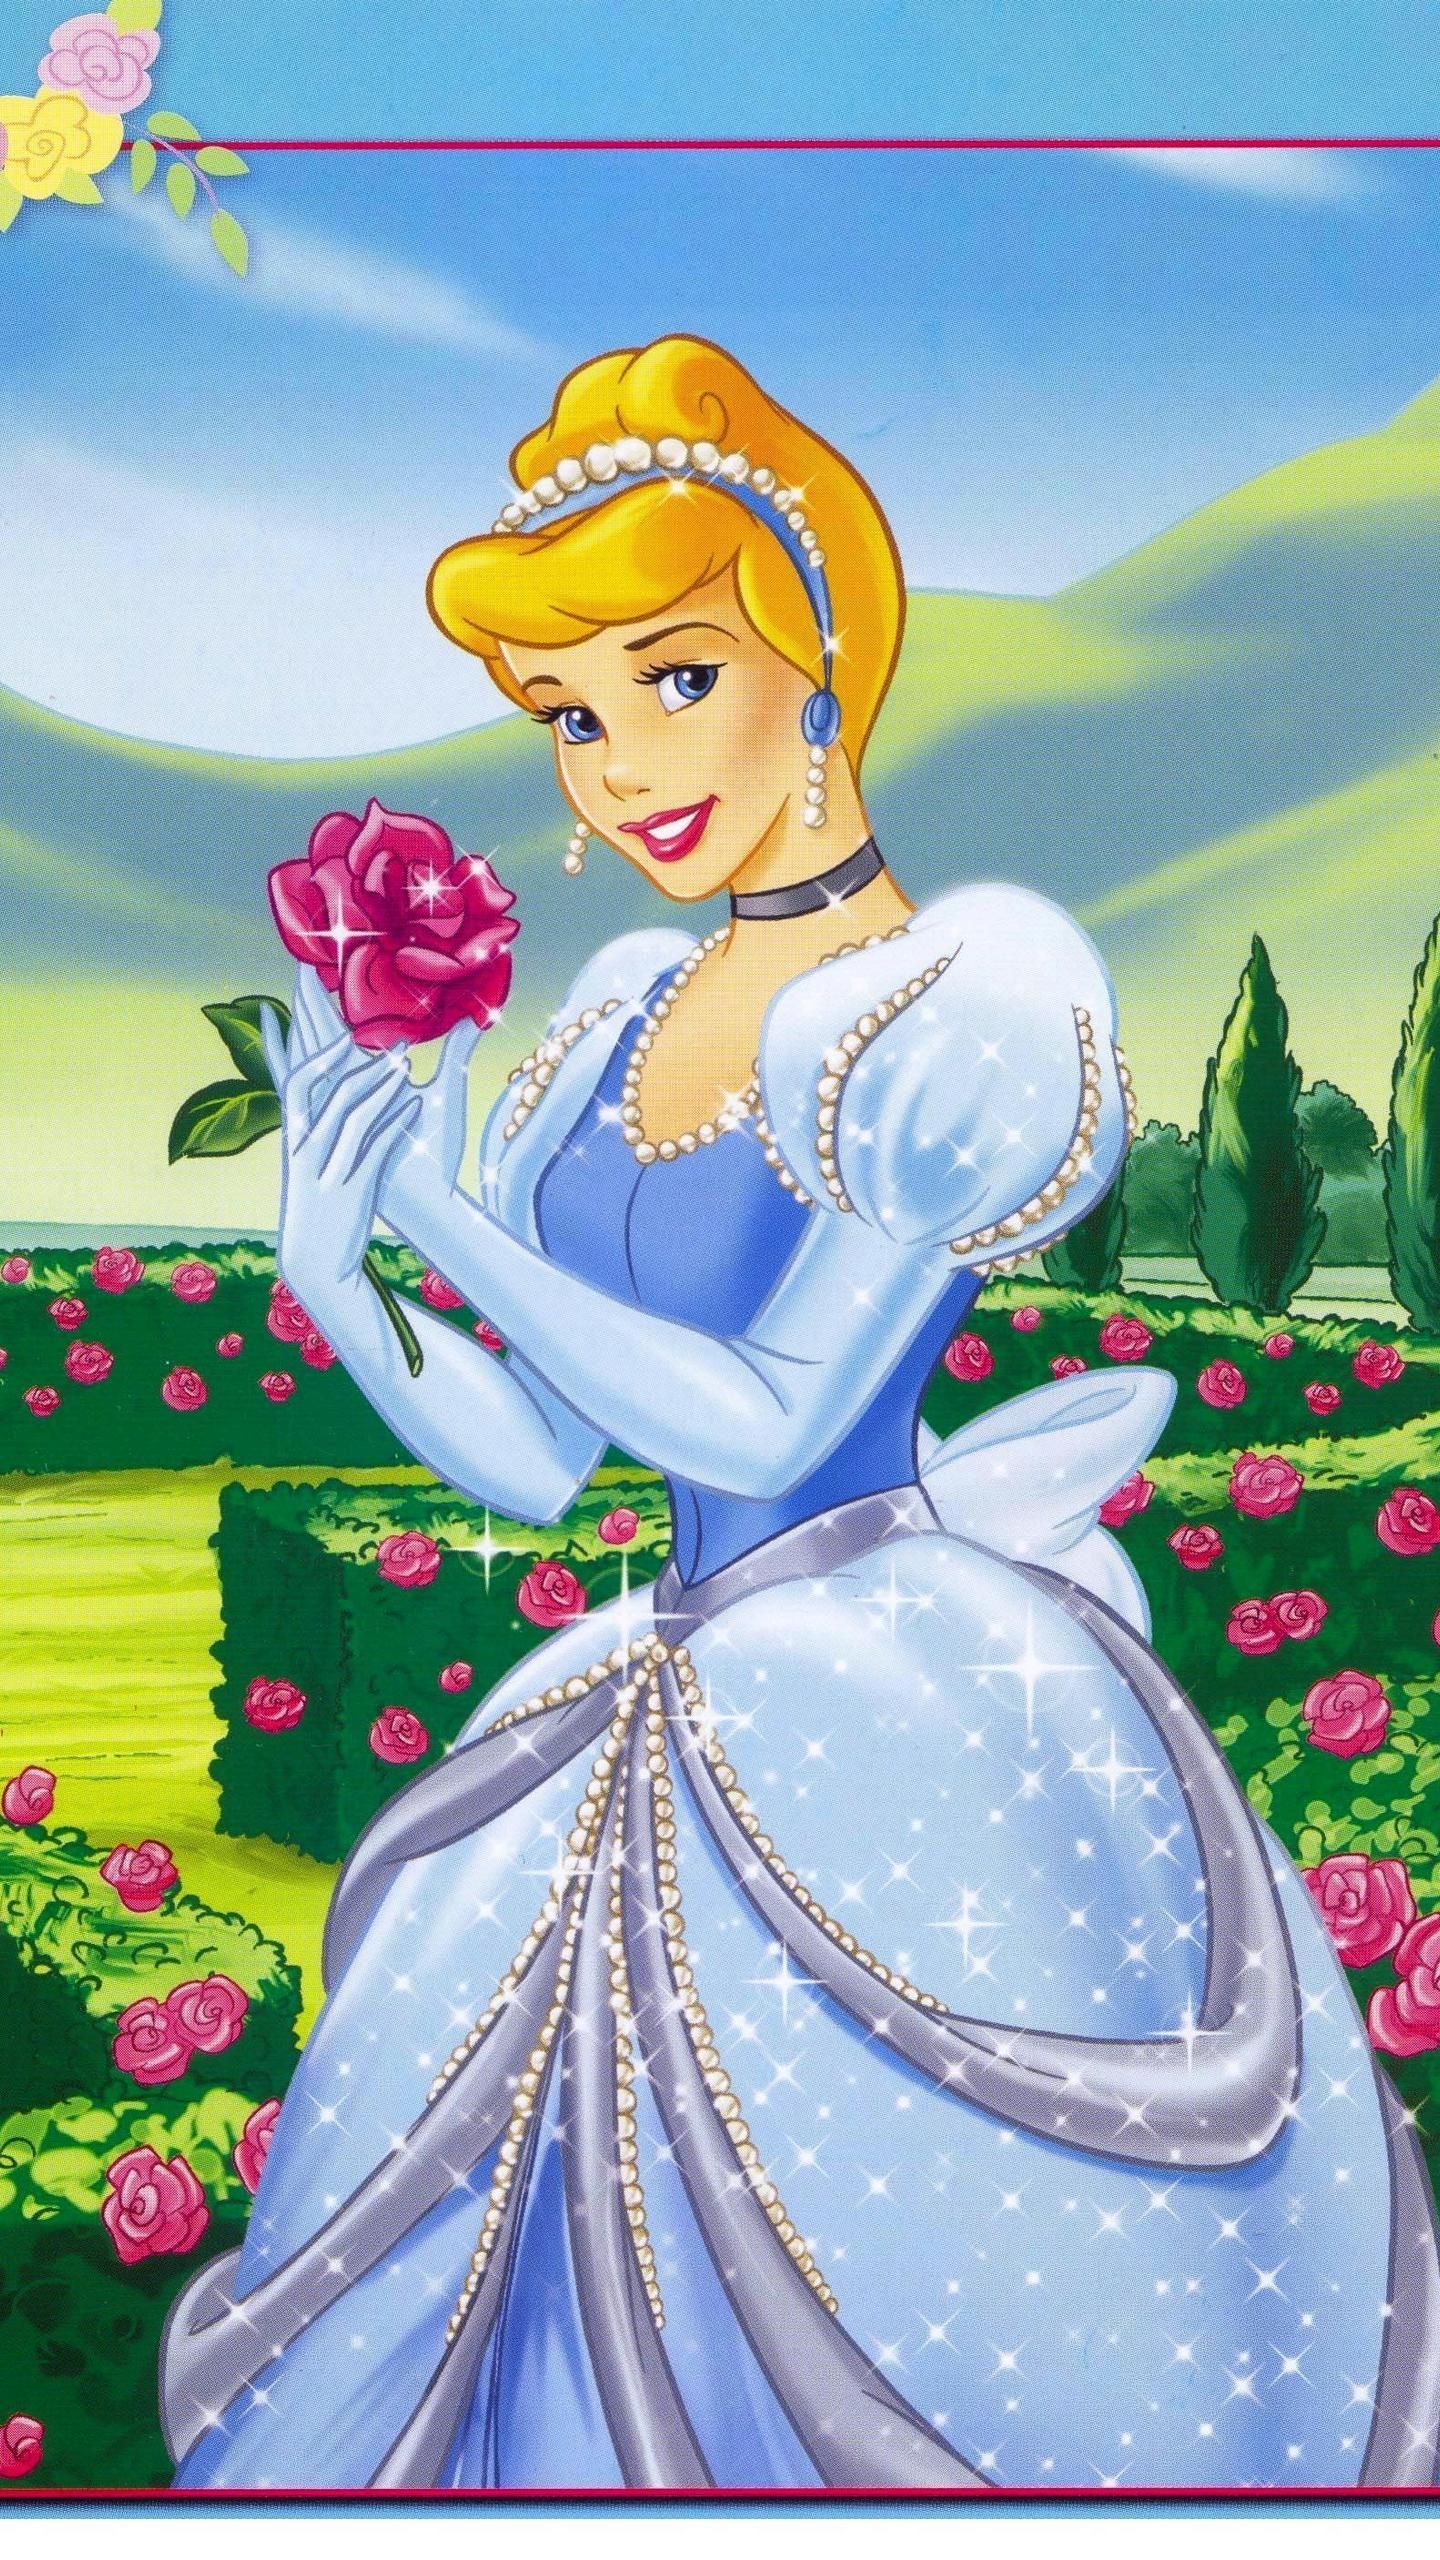 Free Download Disney Princess HD Wallpapers  PixelsTalkNet